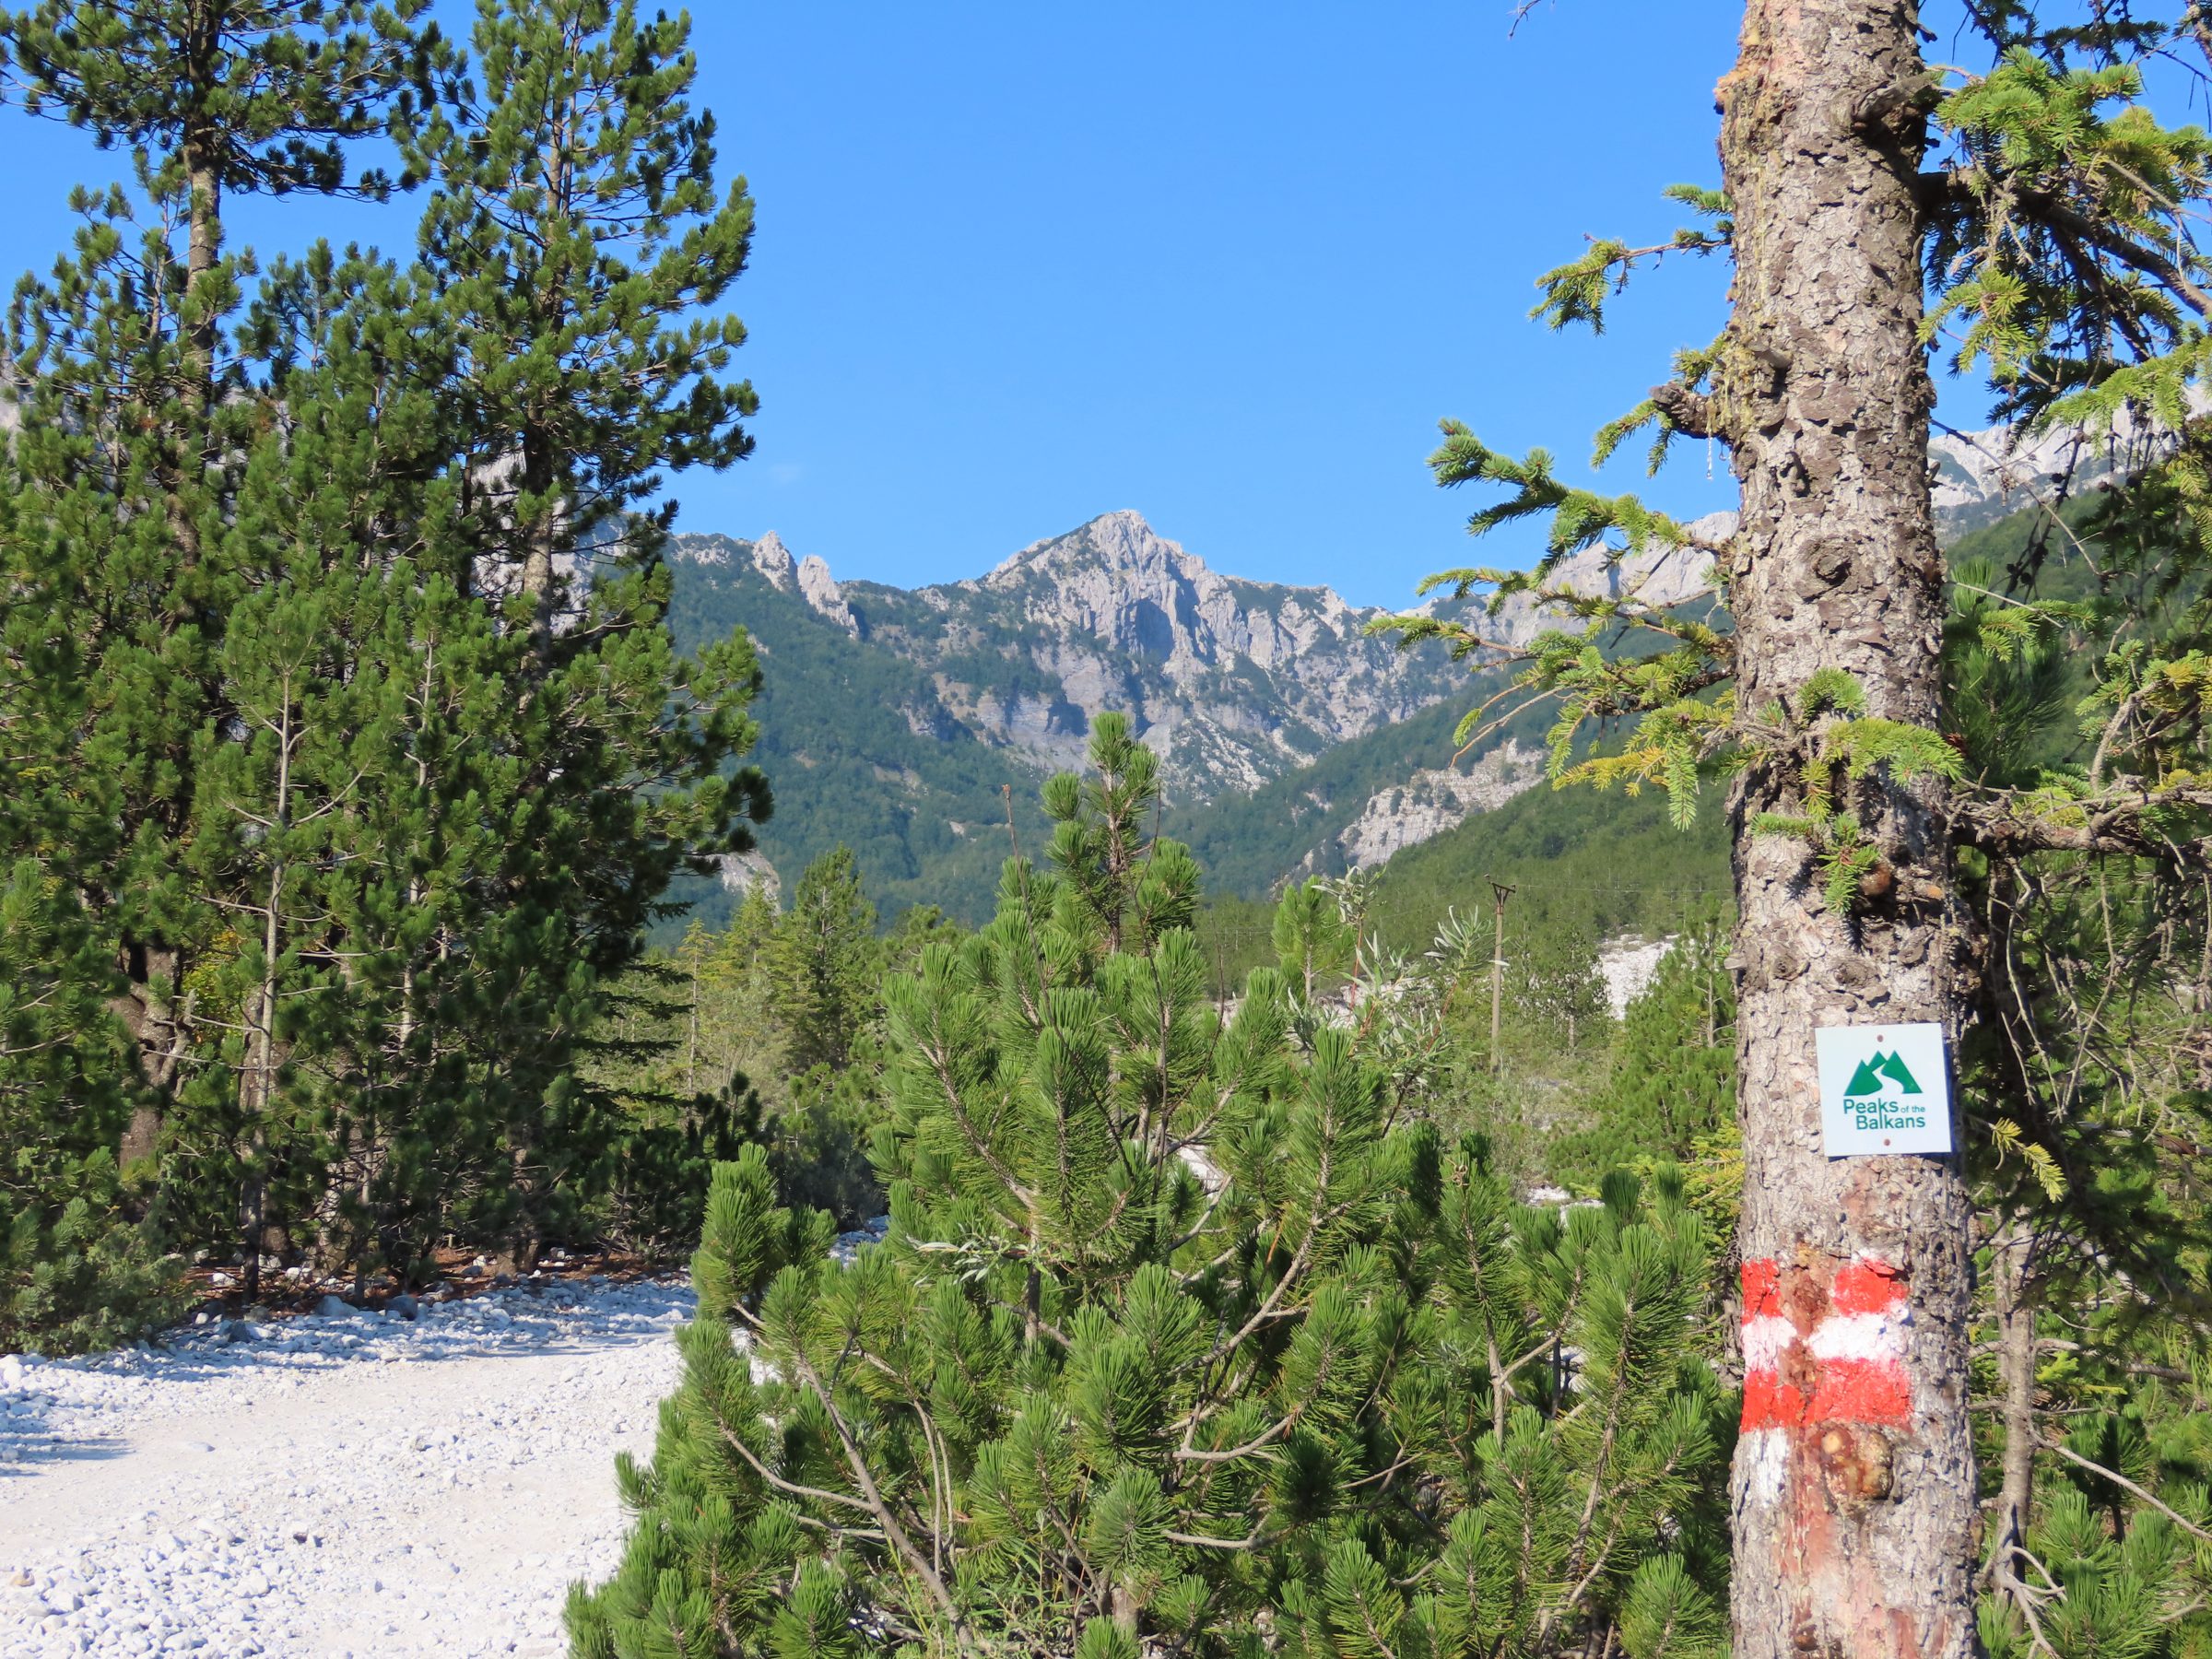 Rot/weiße Streifen an den Bäumen | Gipfel des Balkan Trail